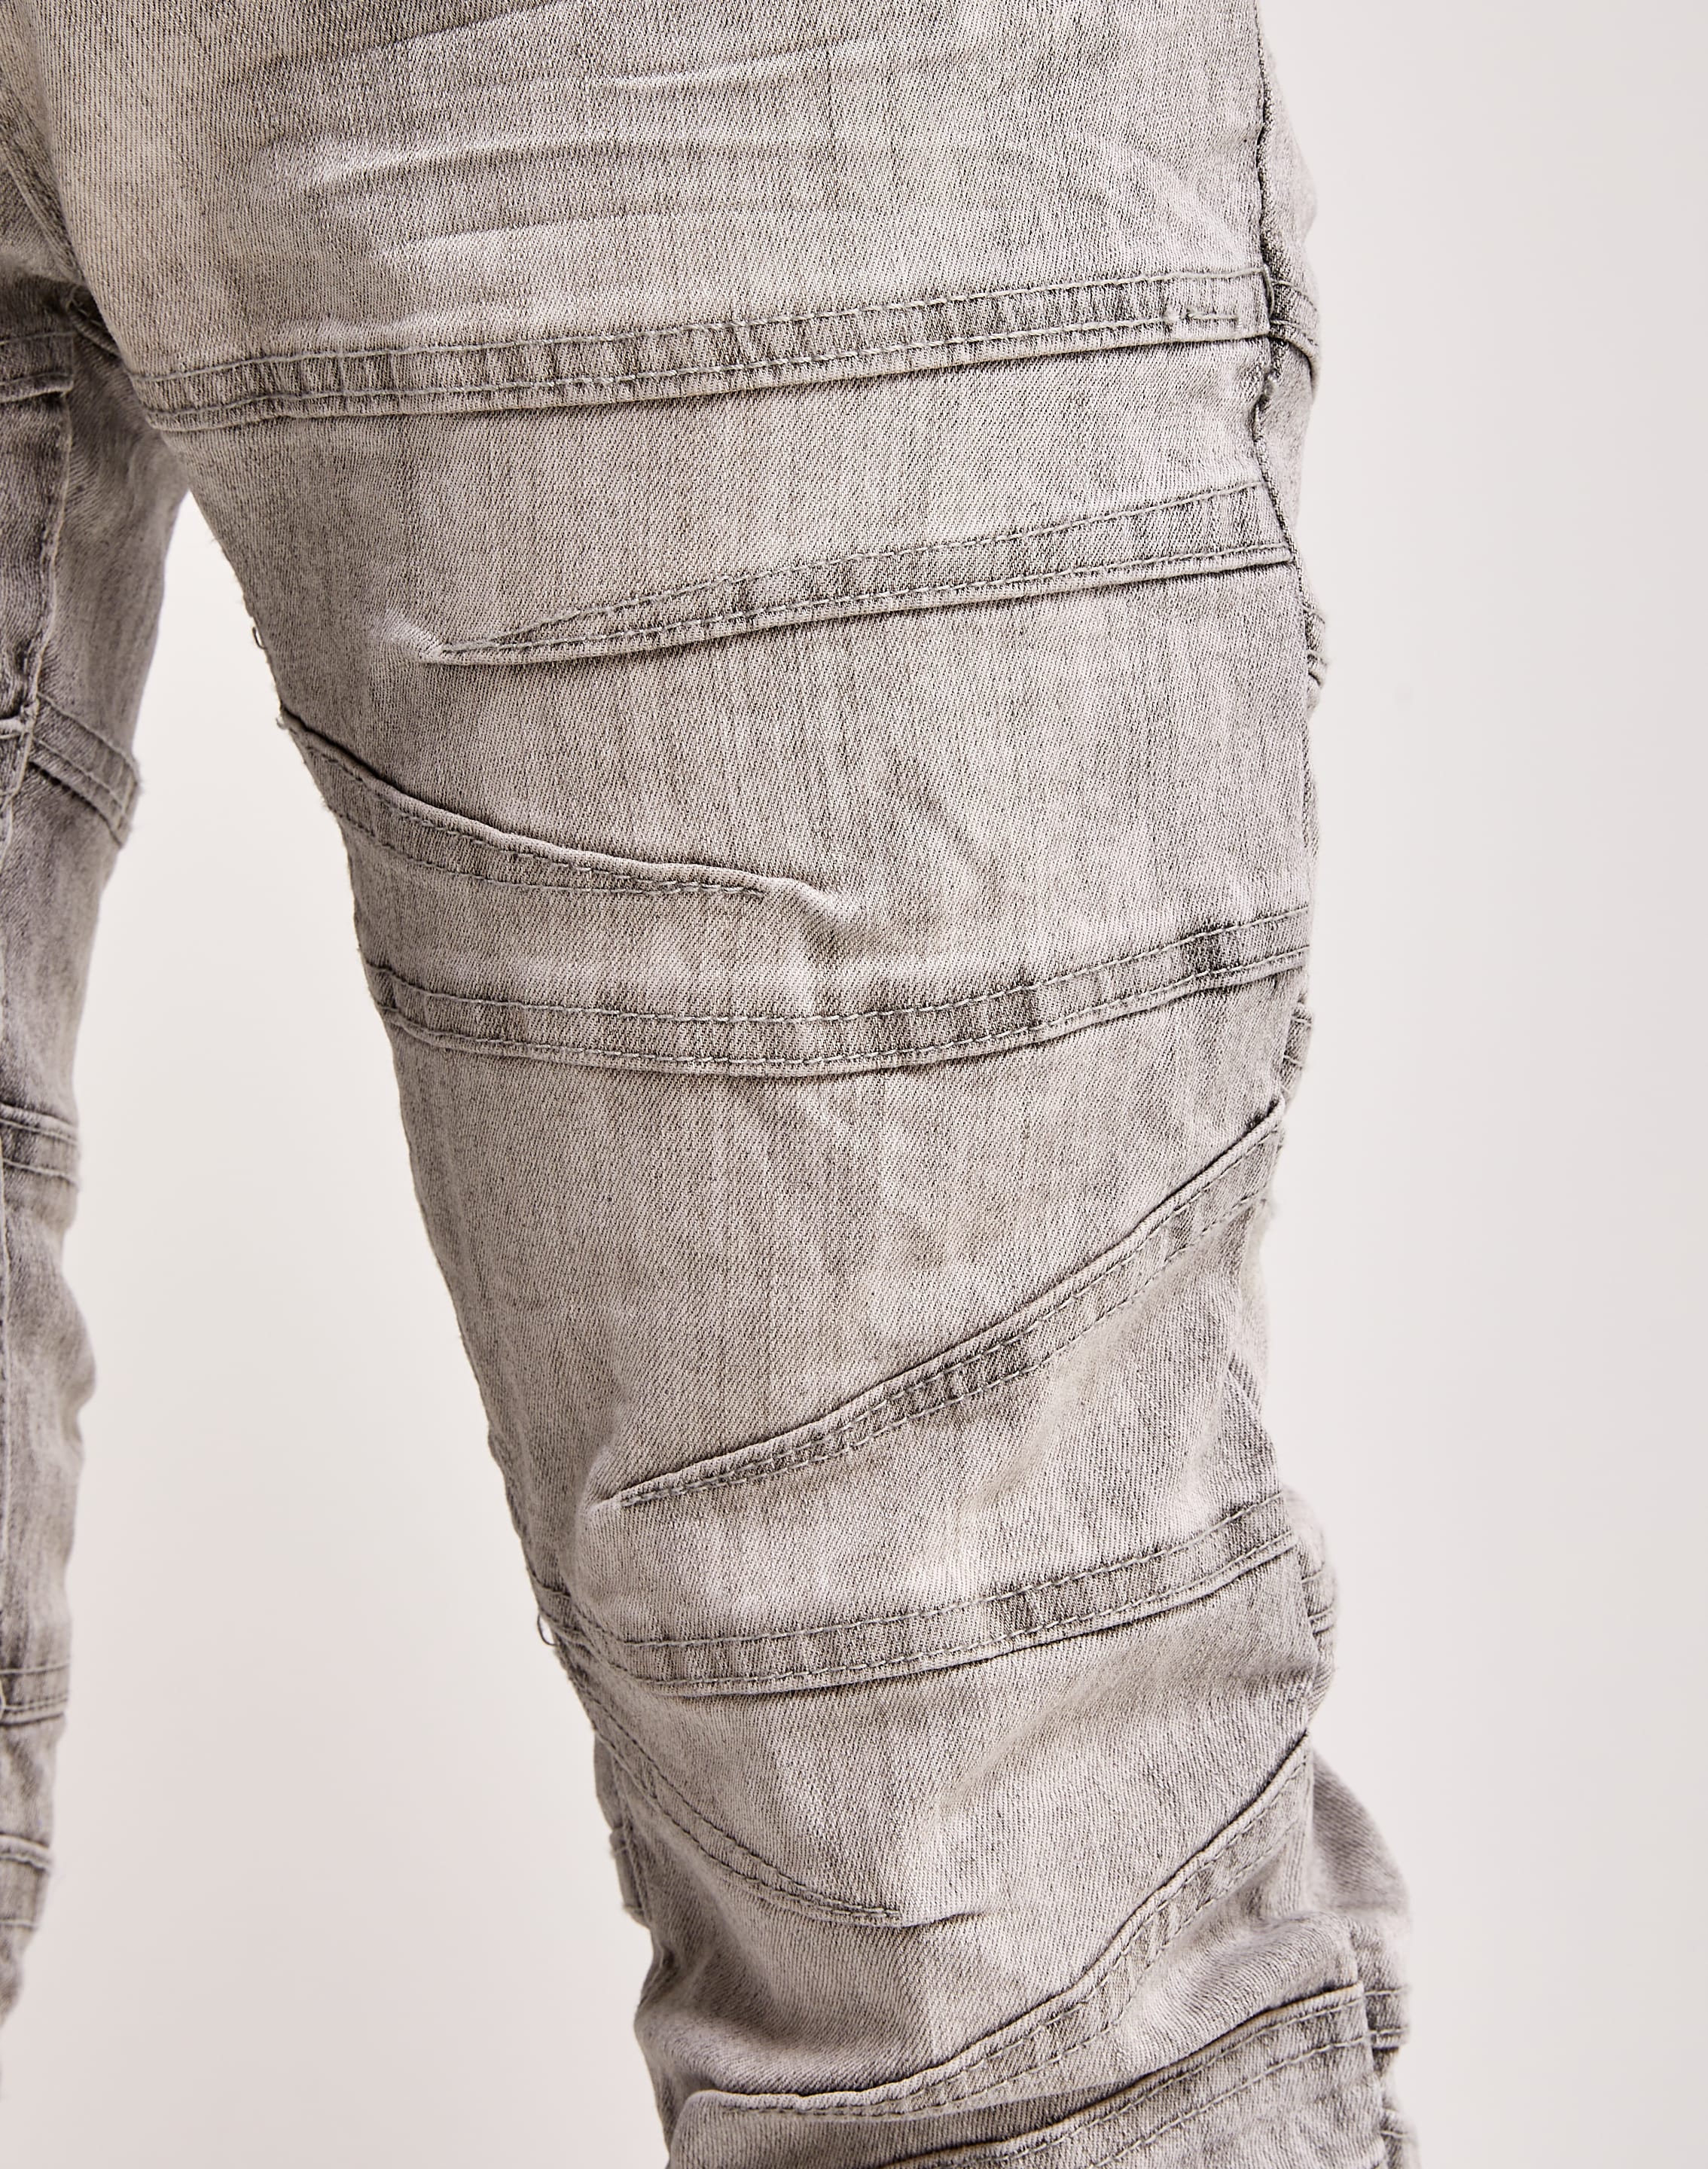 WAIMEA Stacked Denim Jeans – DTLR